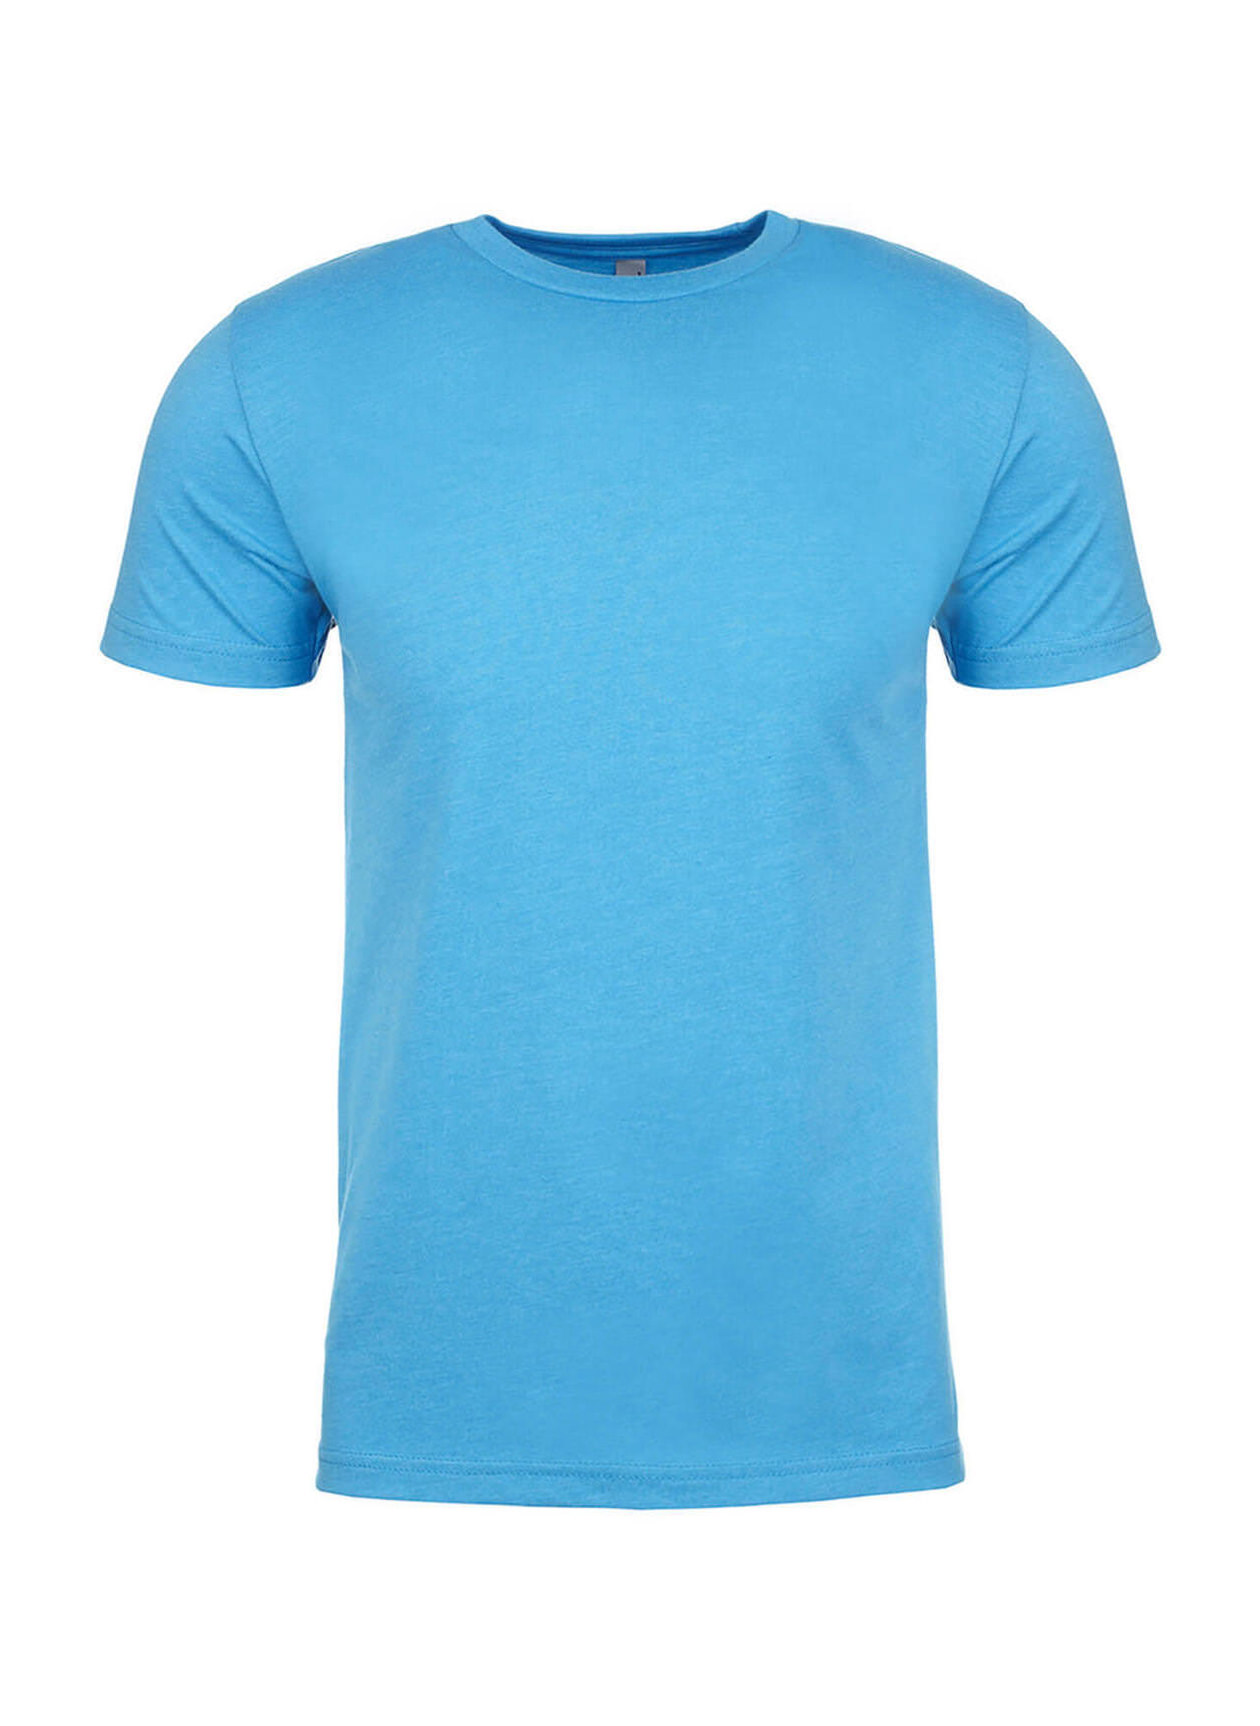 Next Level Men's Turquoise Unisex CVC Crewneck T-Shirt